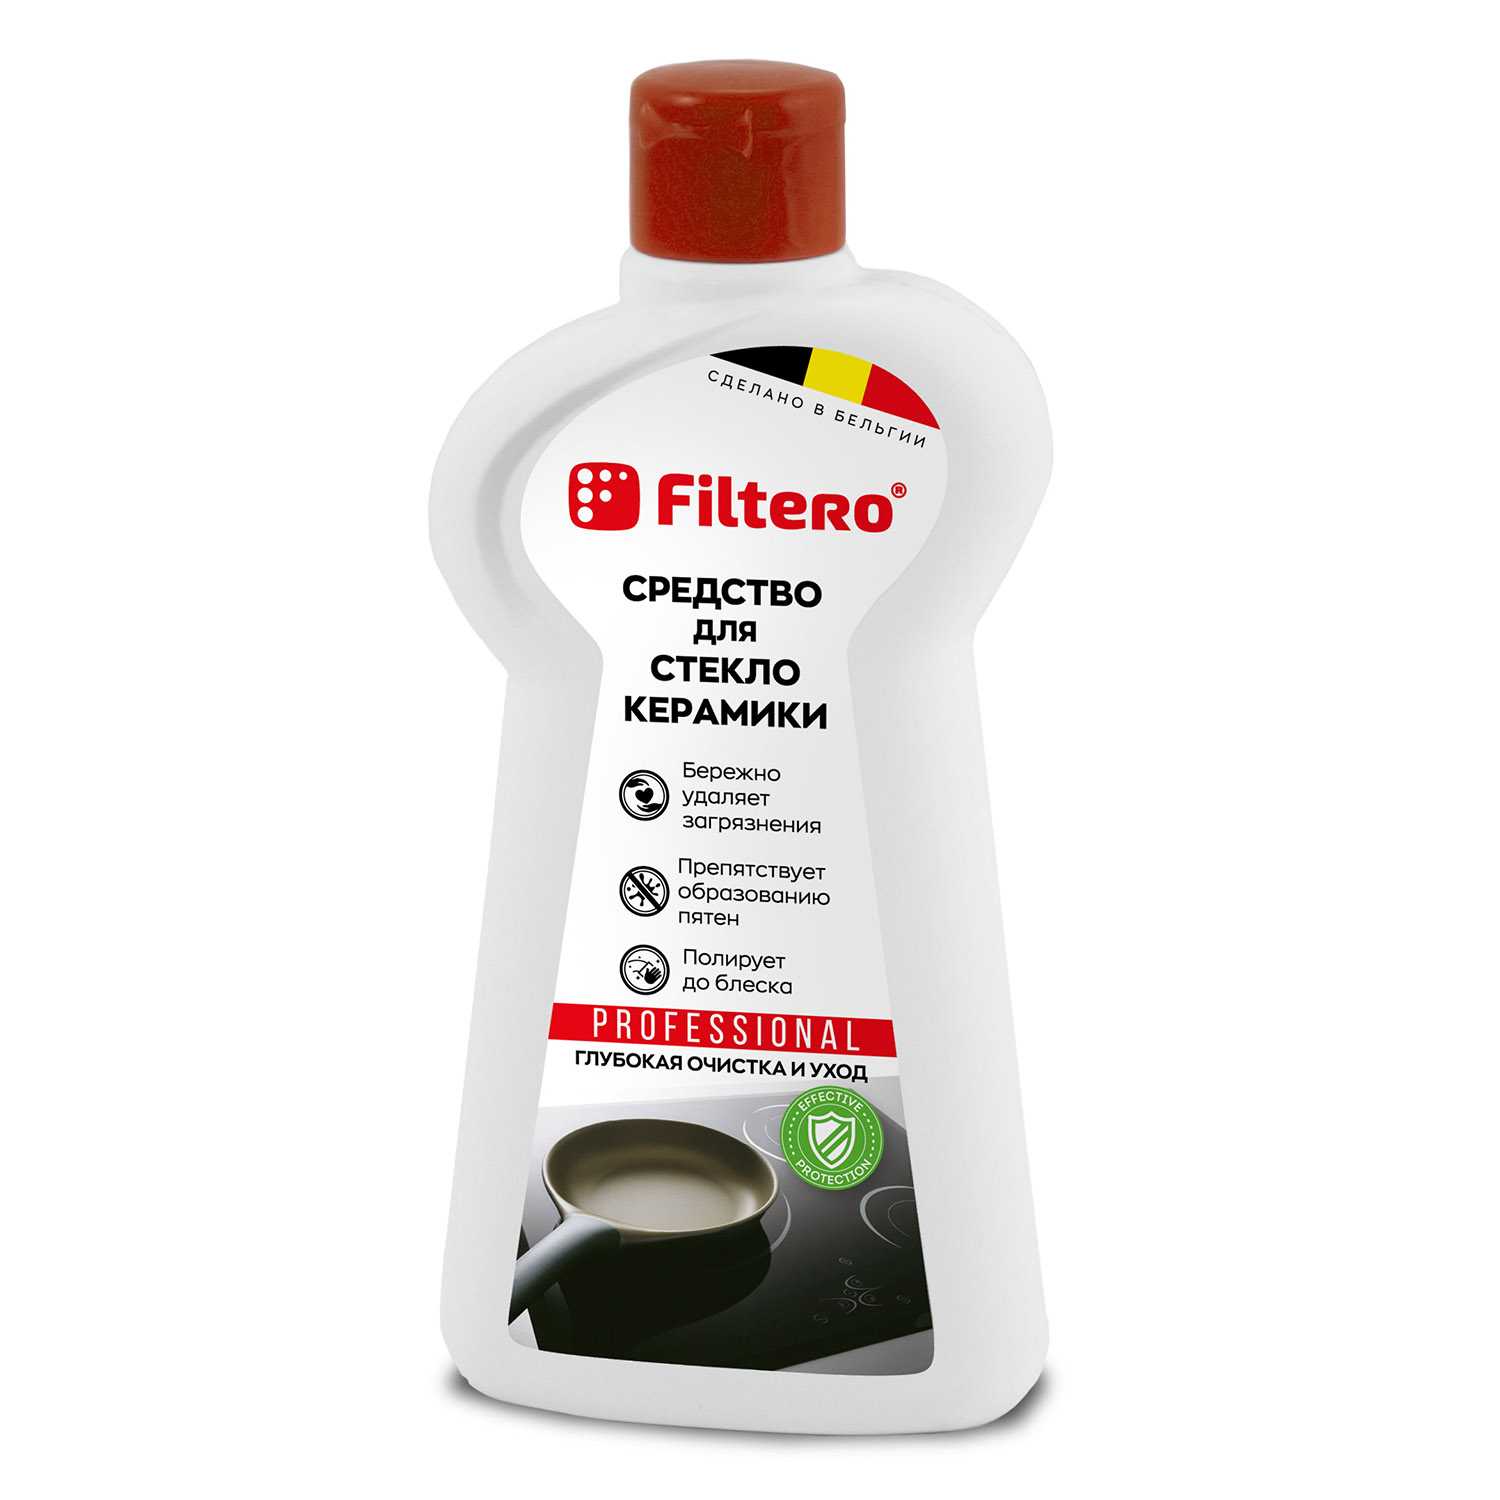 Filtero Средство для стеклокерамики, 225 мл., Арт.212